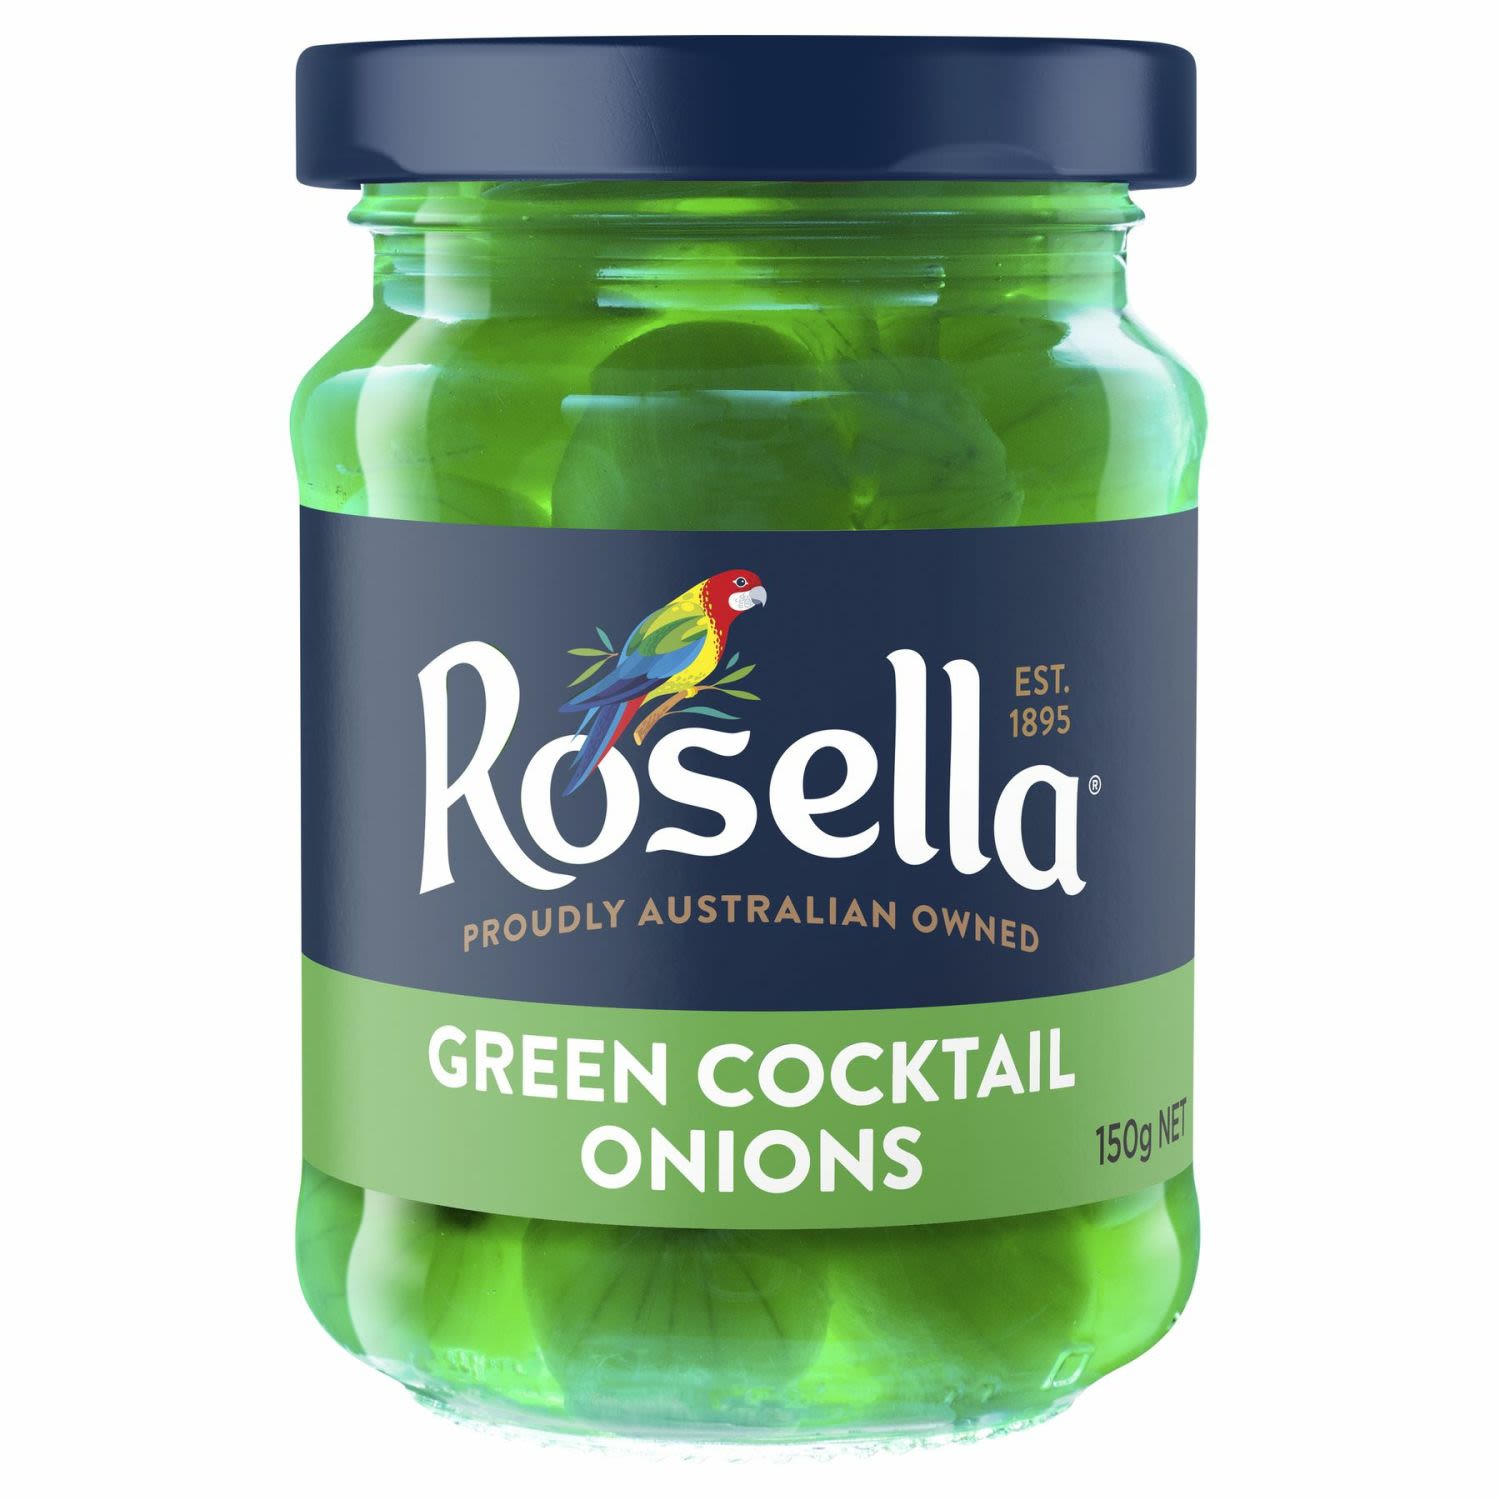 Rosella Aristocrat Onions Cocktail Green, 150 Gram